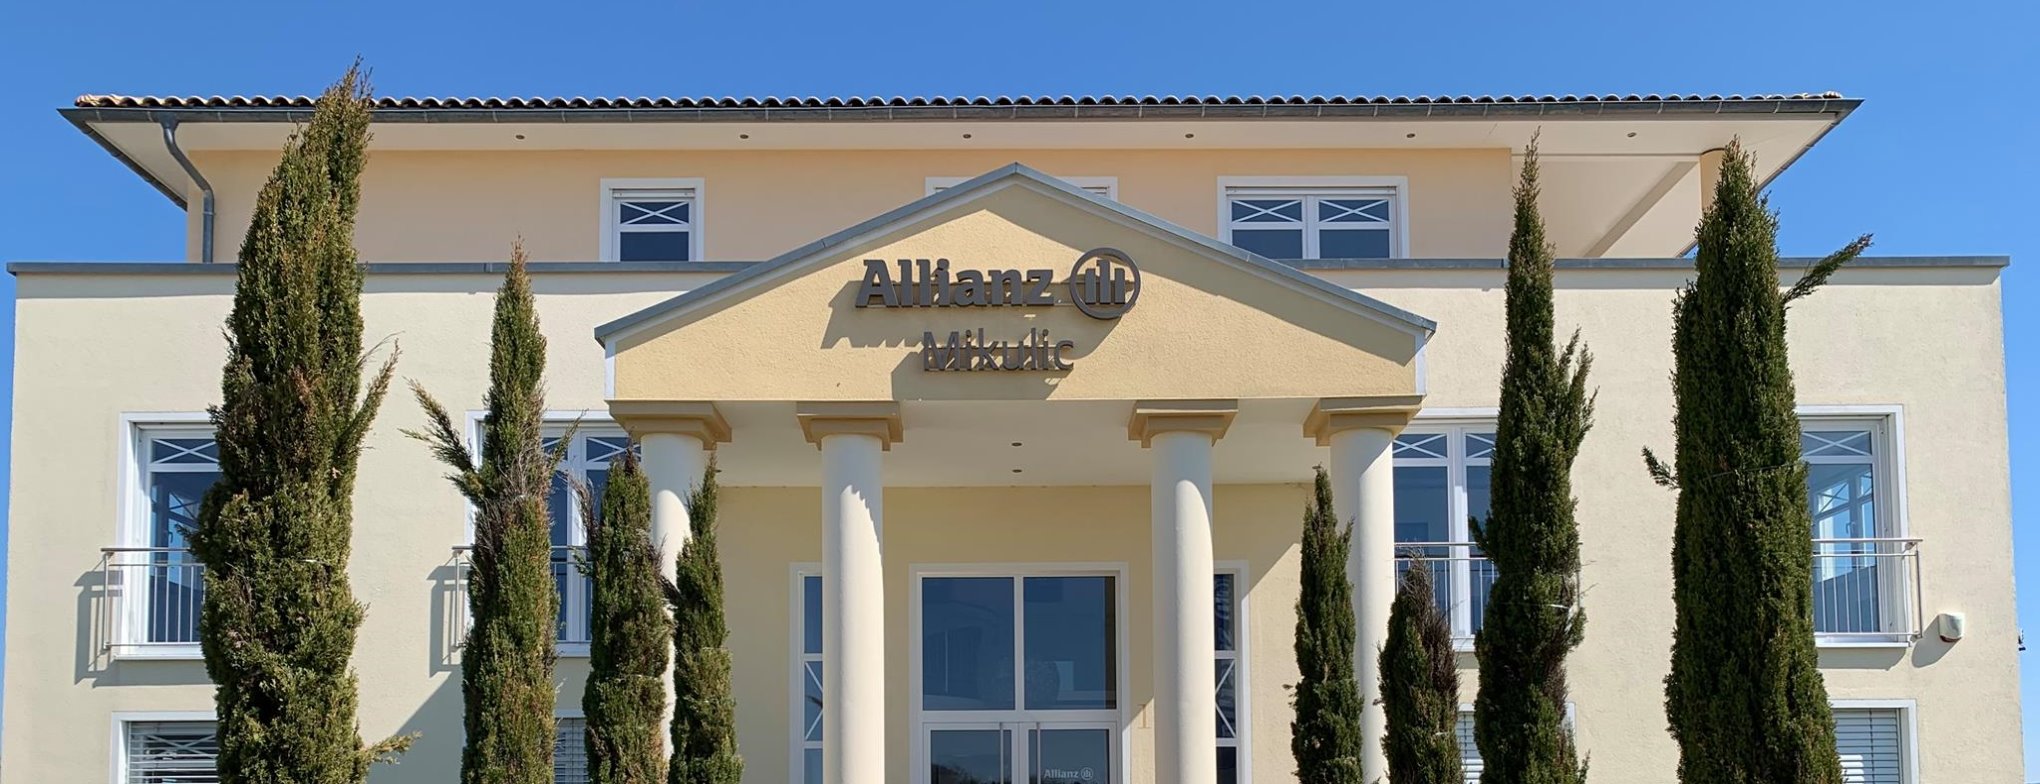 Allianz Versicherung Robert Mikulic Mutlangen - Allianz MIKULIC Office